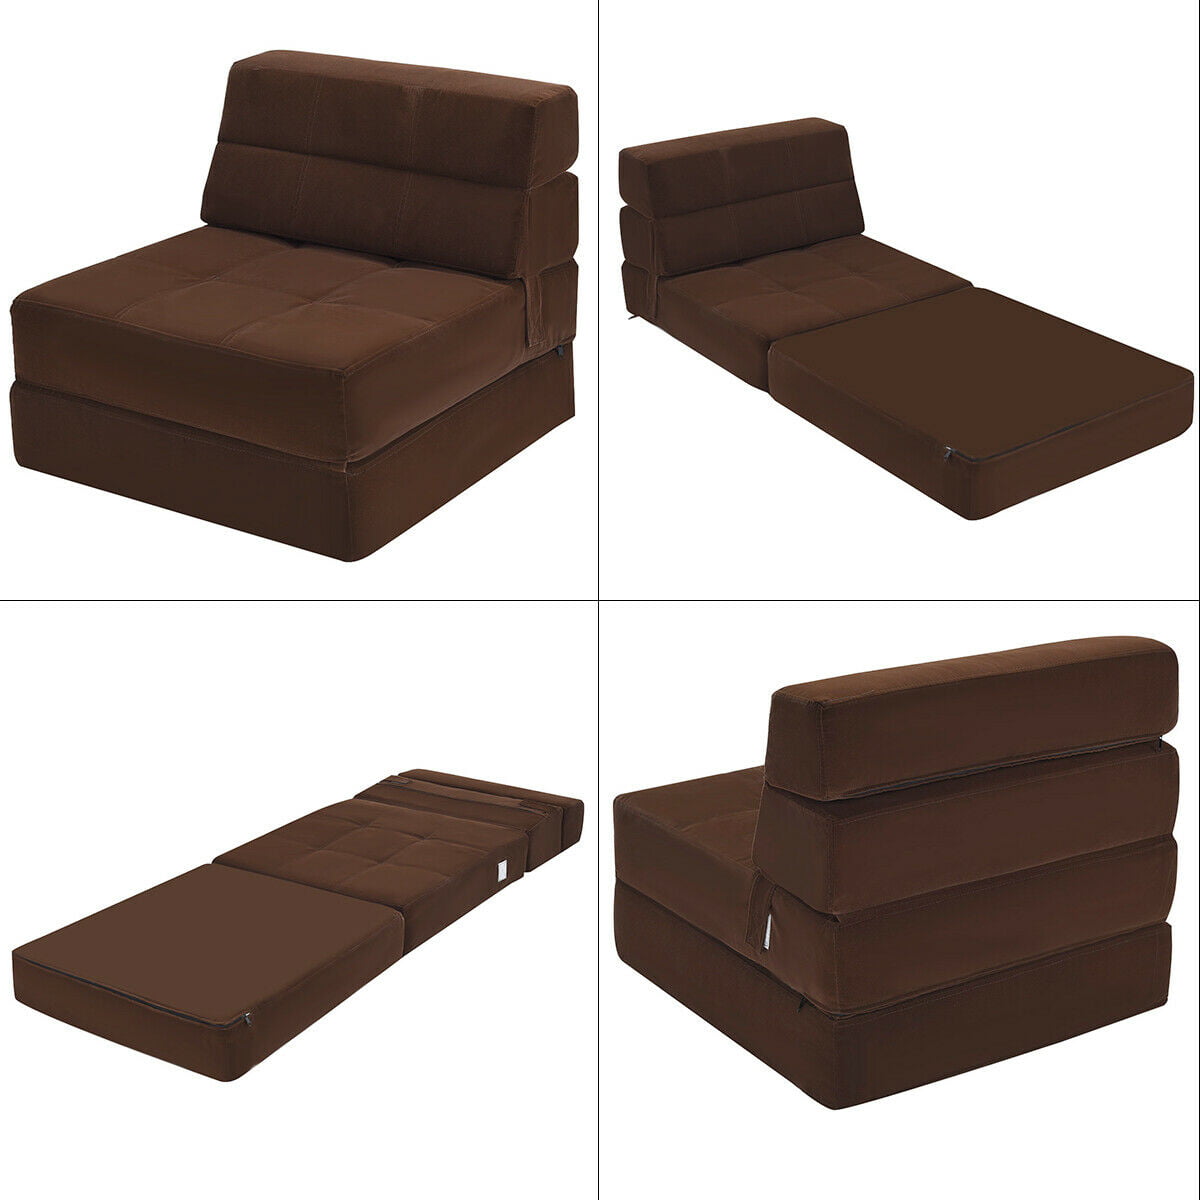 Costway Tri Fold Fold Down Chair Flip Out Lounger Convertible Sleeper Bed Couch Dorm Walmart Com Walmart Com